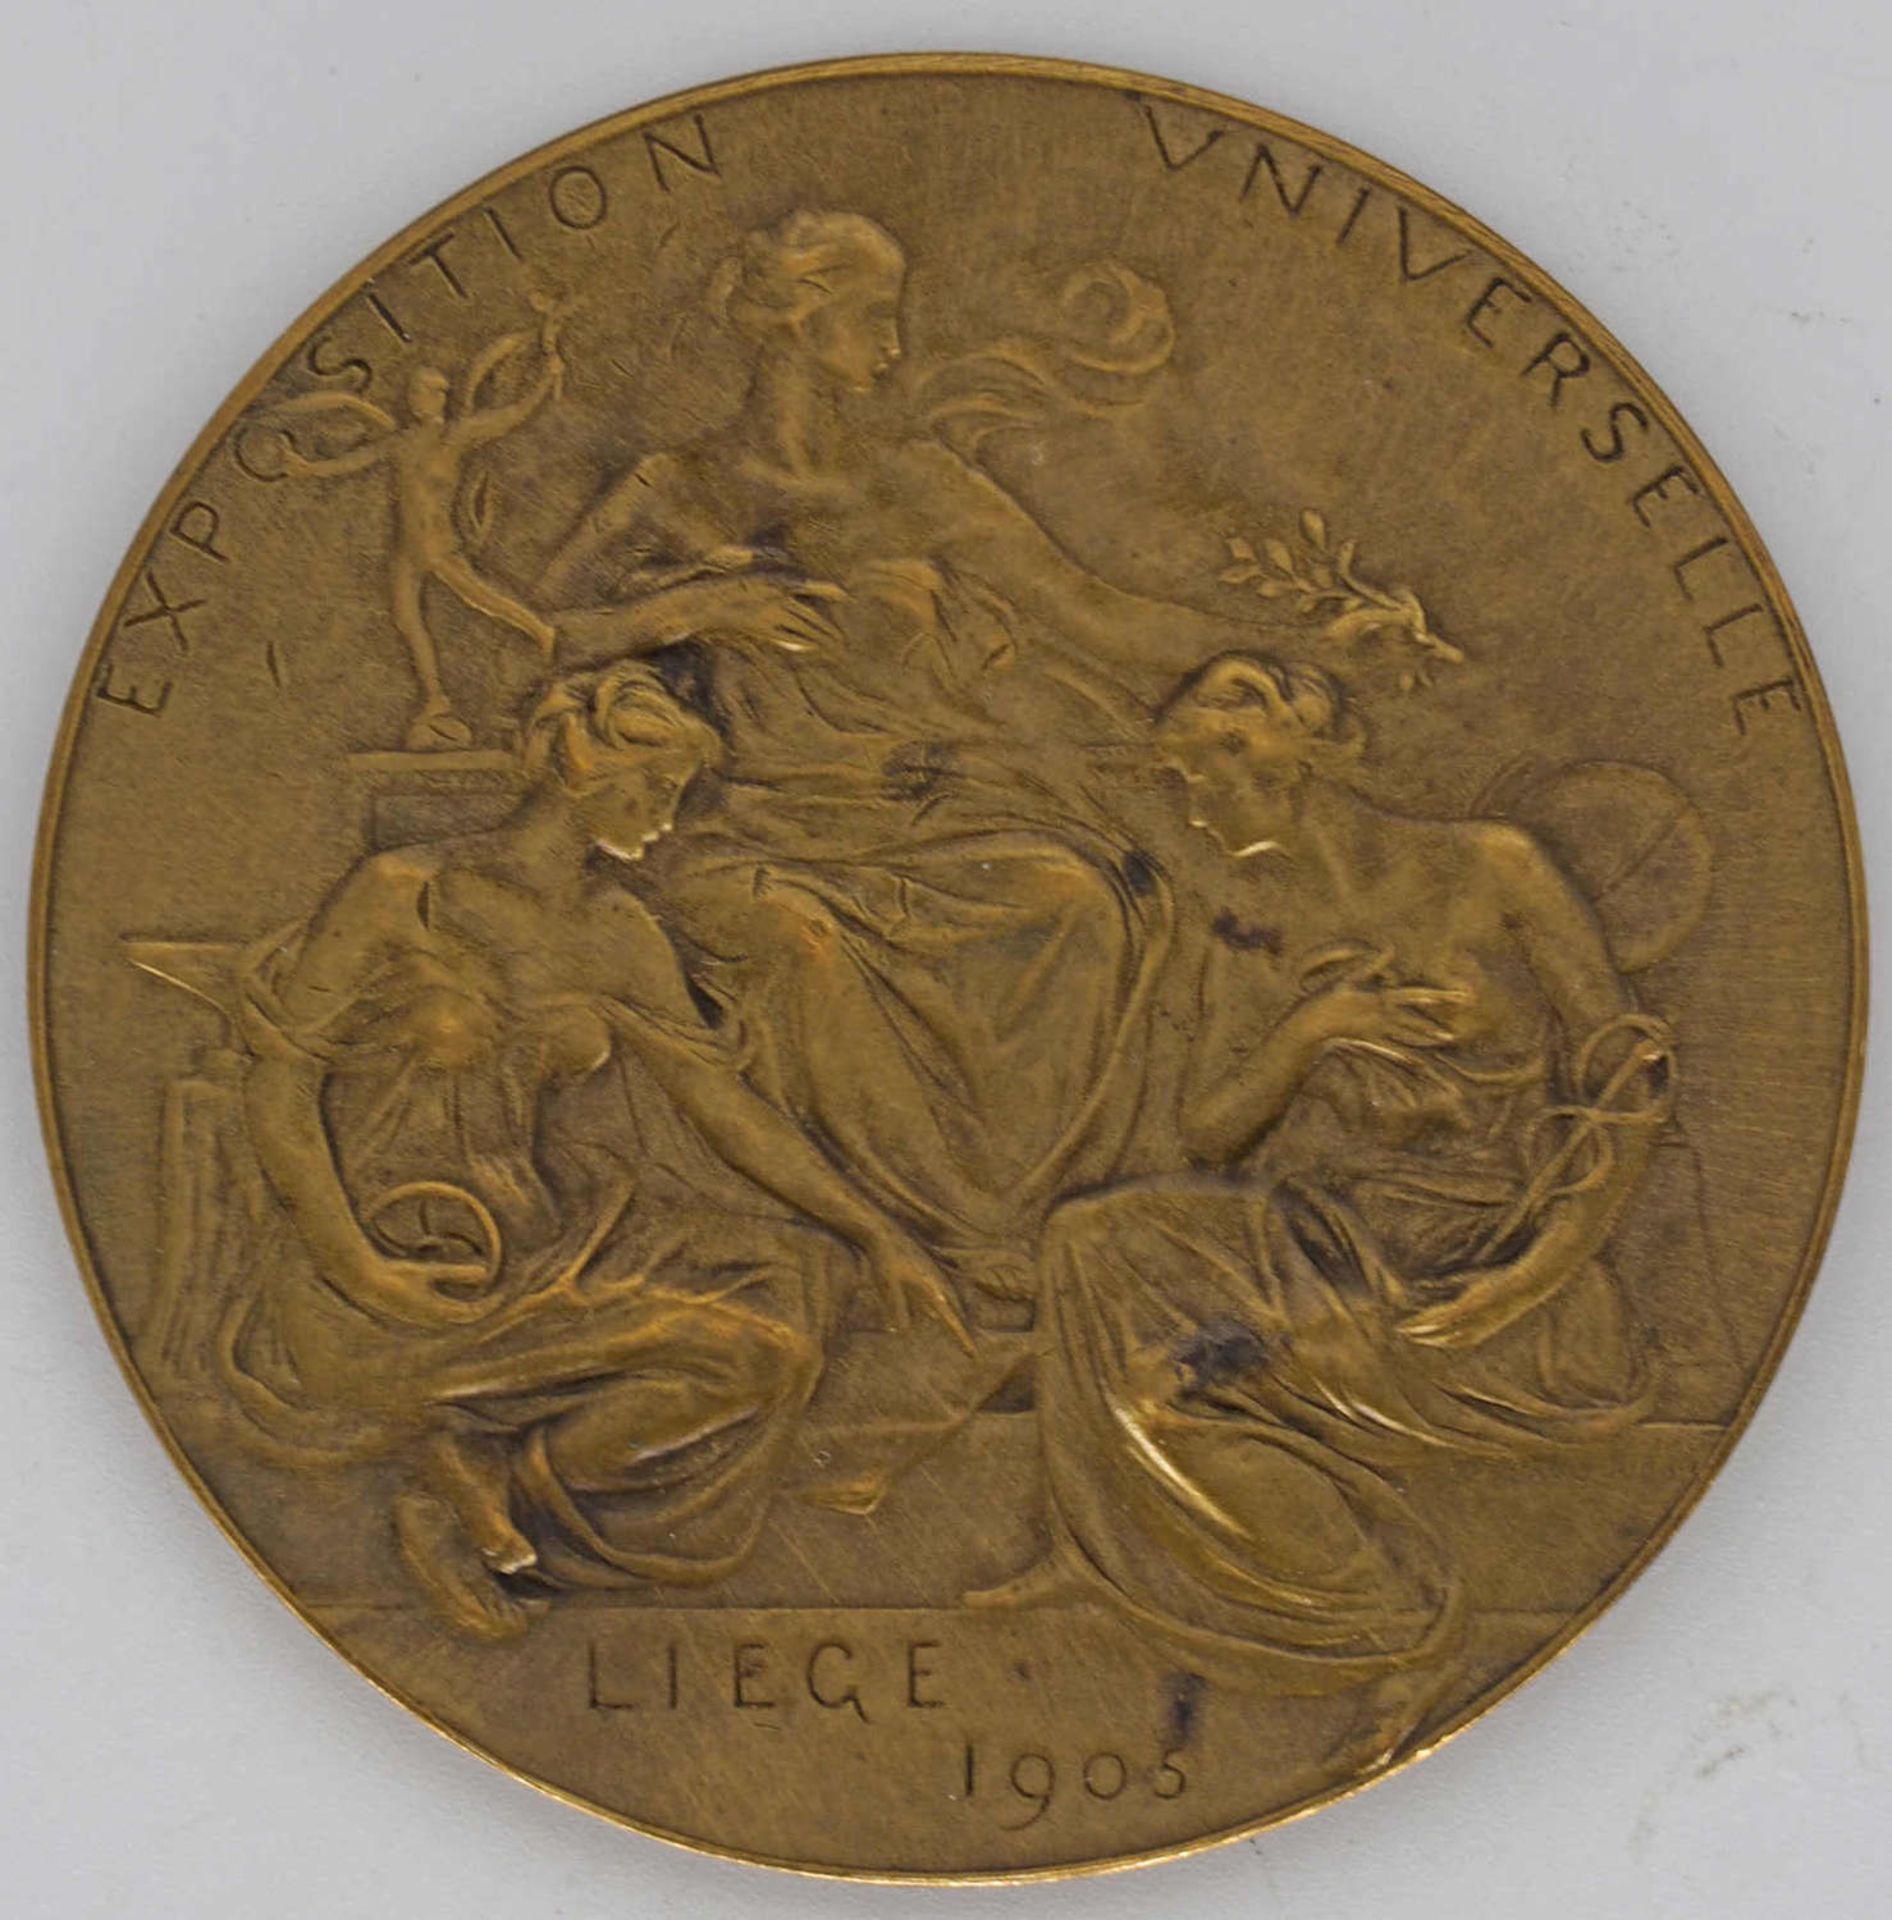 Medaille "Exposition Universelle Liege 1905". Gewicht: ca. 129,6 g. Durchmesser: ca. 70 mm. Graveur: